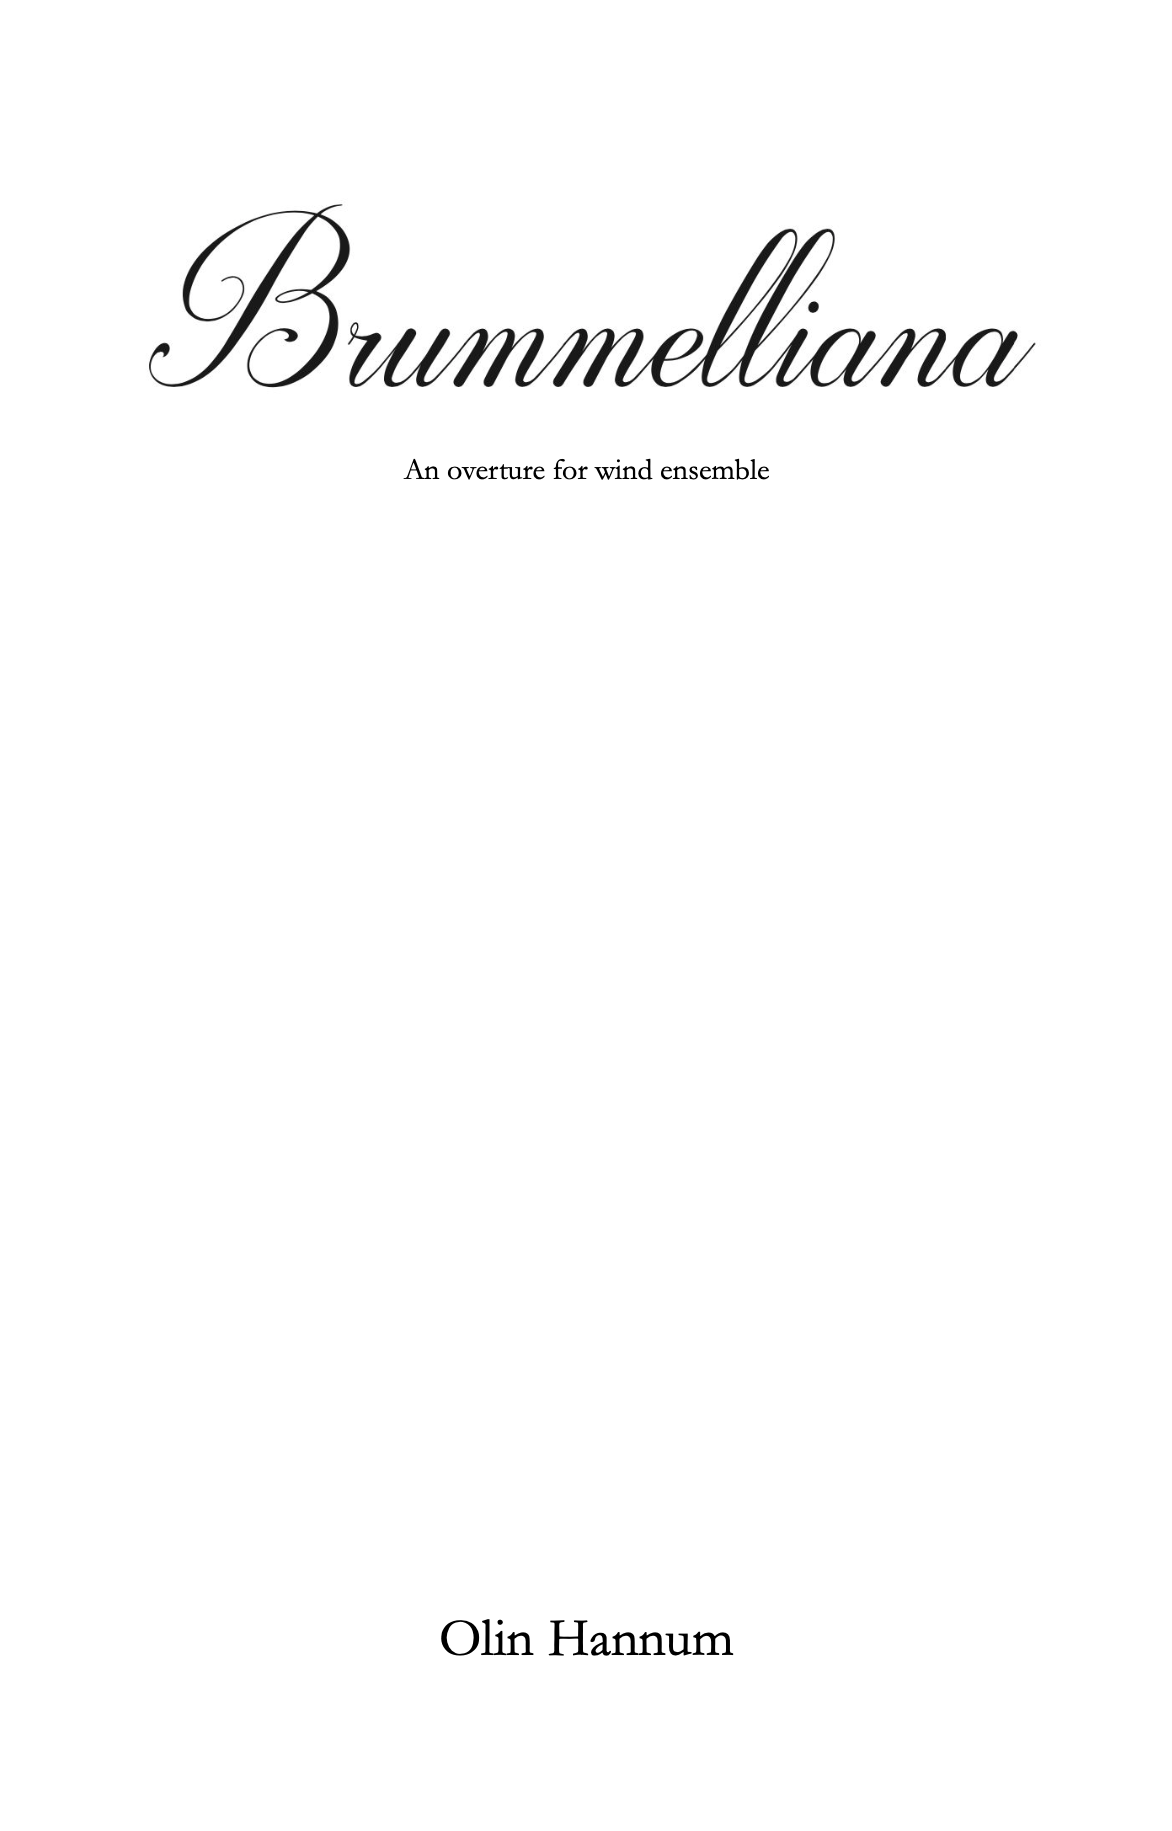 Brummelliana (Score Only) by Olin Hannum